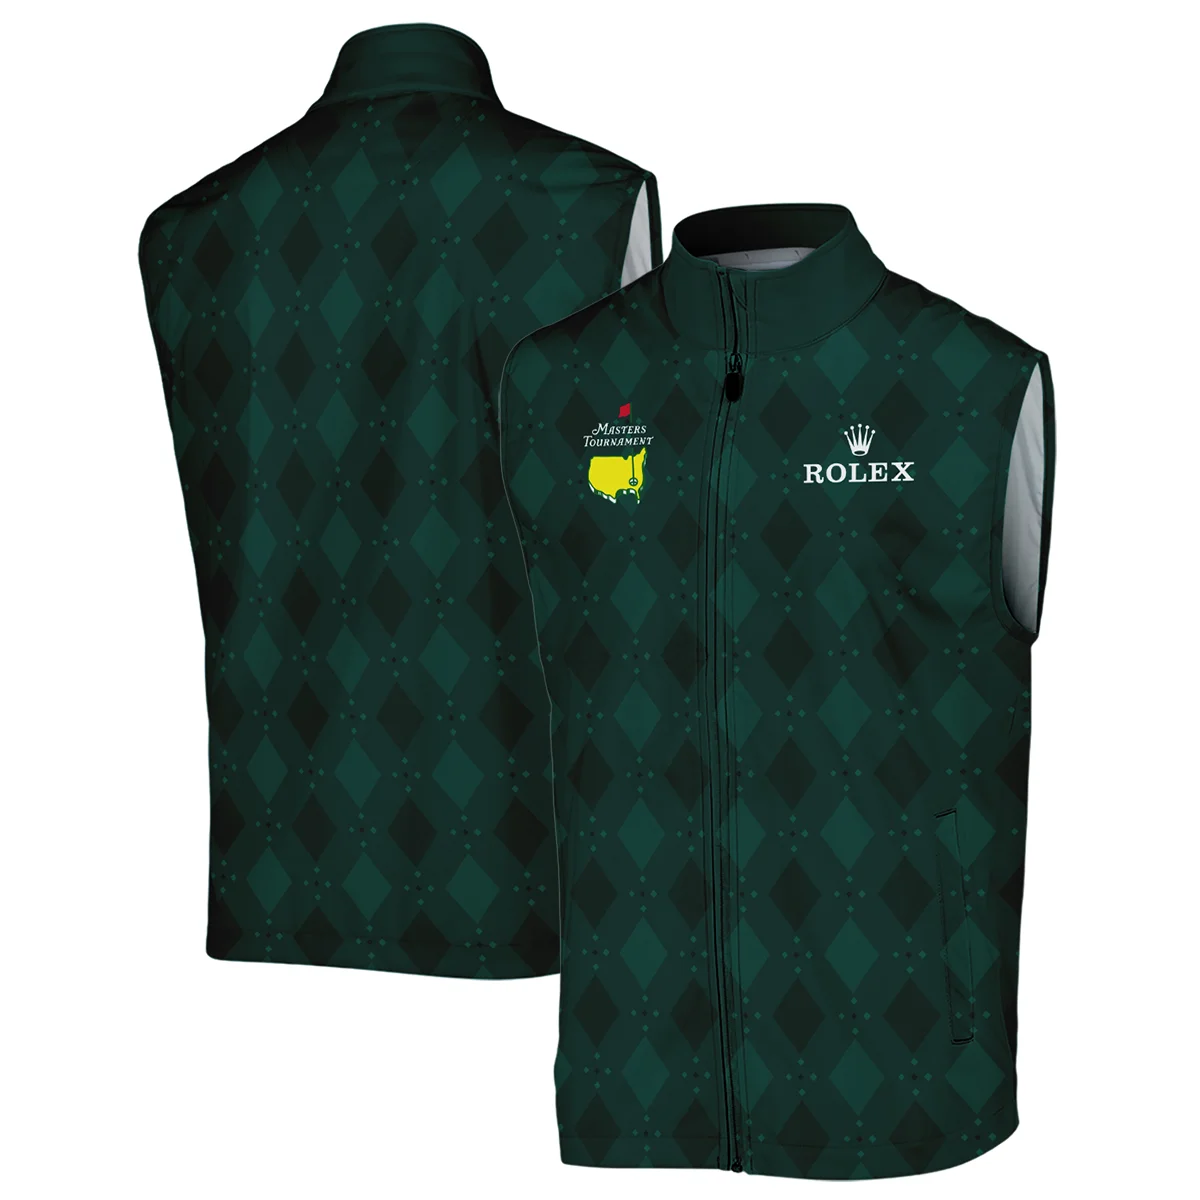 Dark Green Argyle Plaid Pattern Golf Masters Tournament Rolex Quarter-Zip Jacket Style Classic Quarter-Zip Jacket